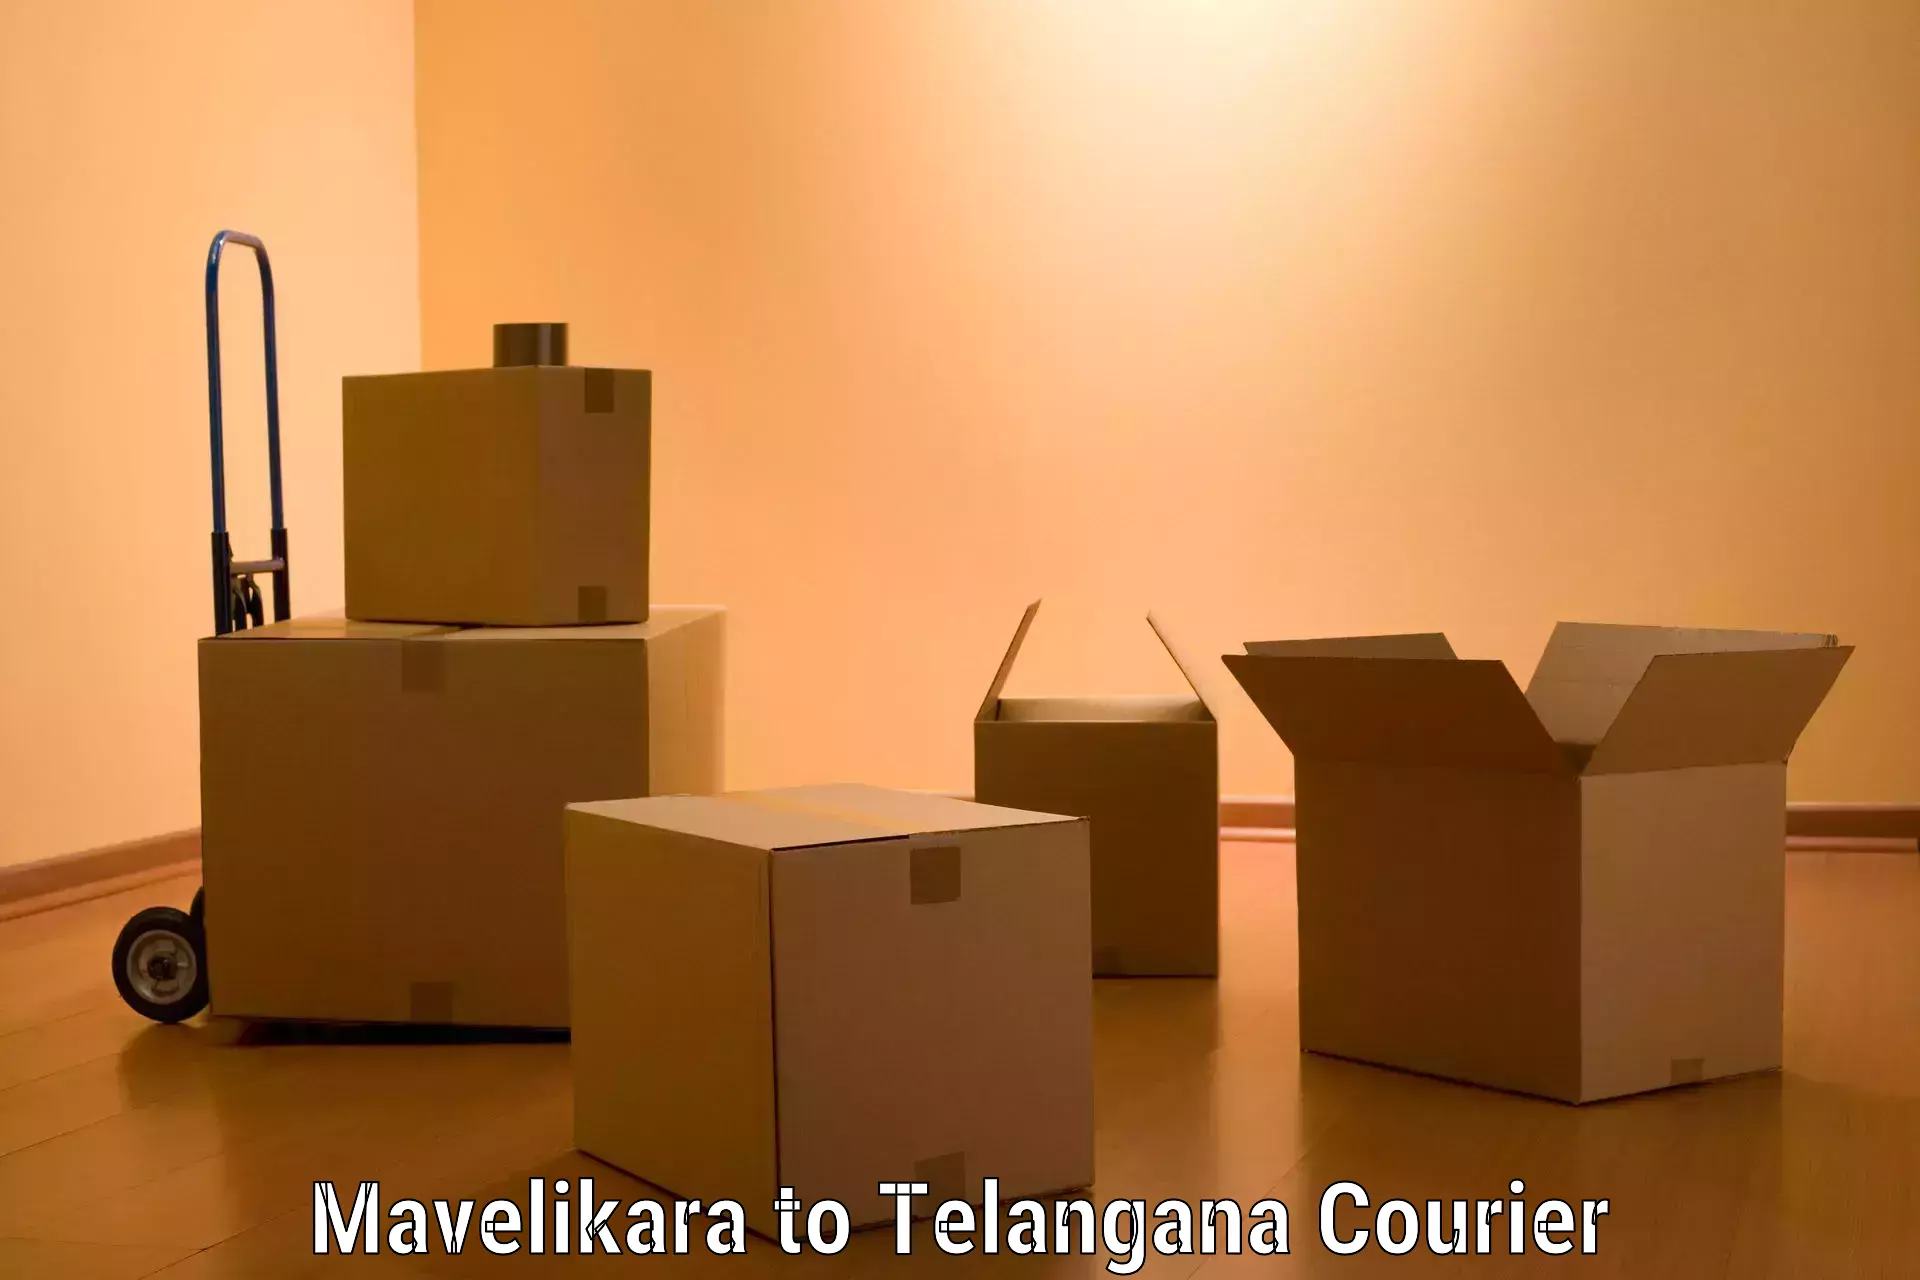 Moving and packing experts in Mavelikara to Yellandu